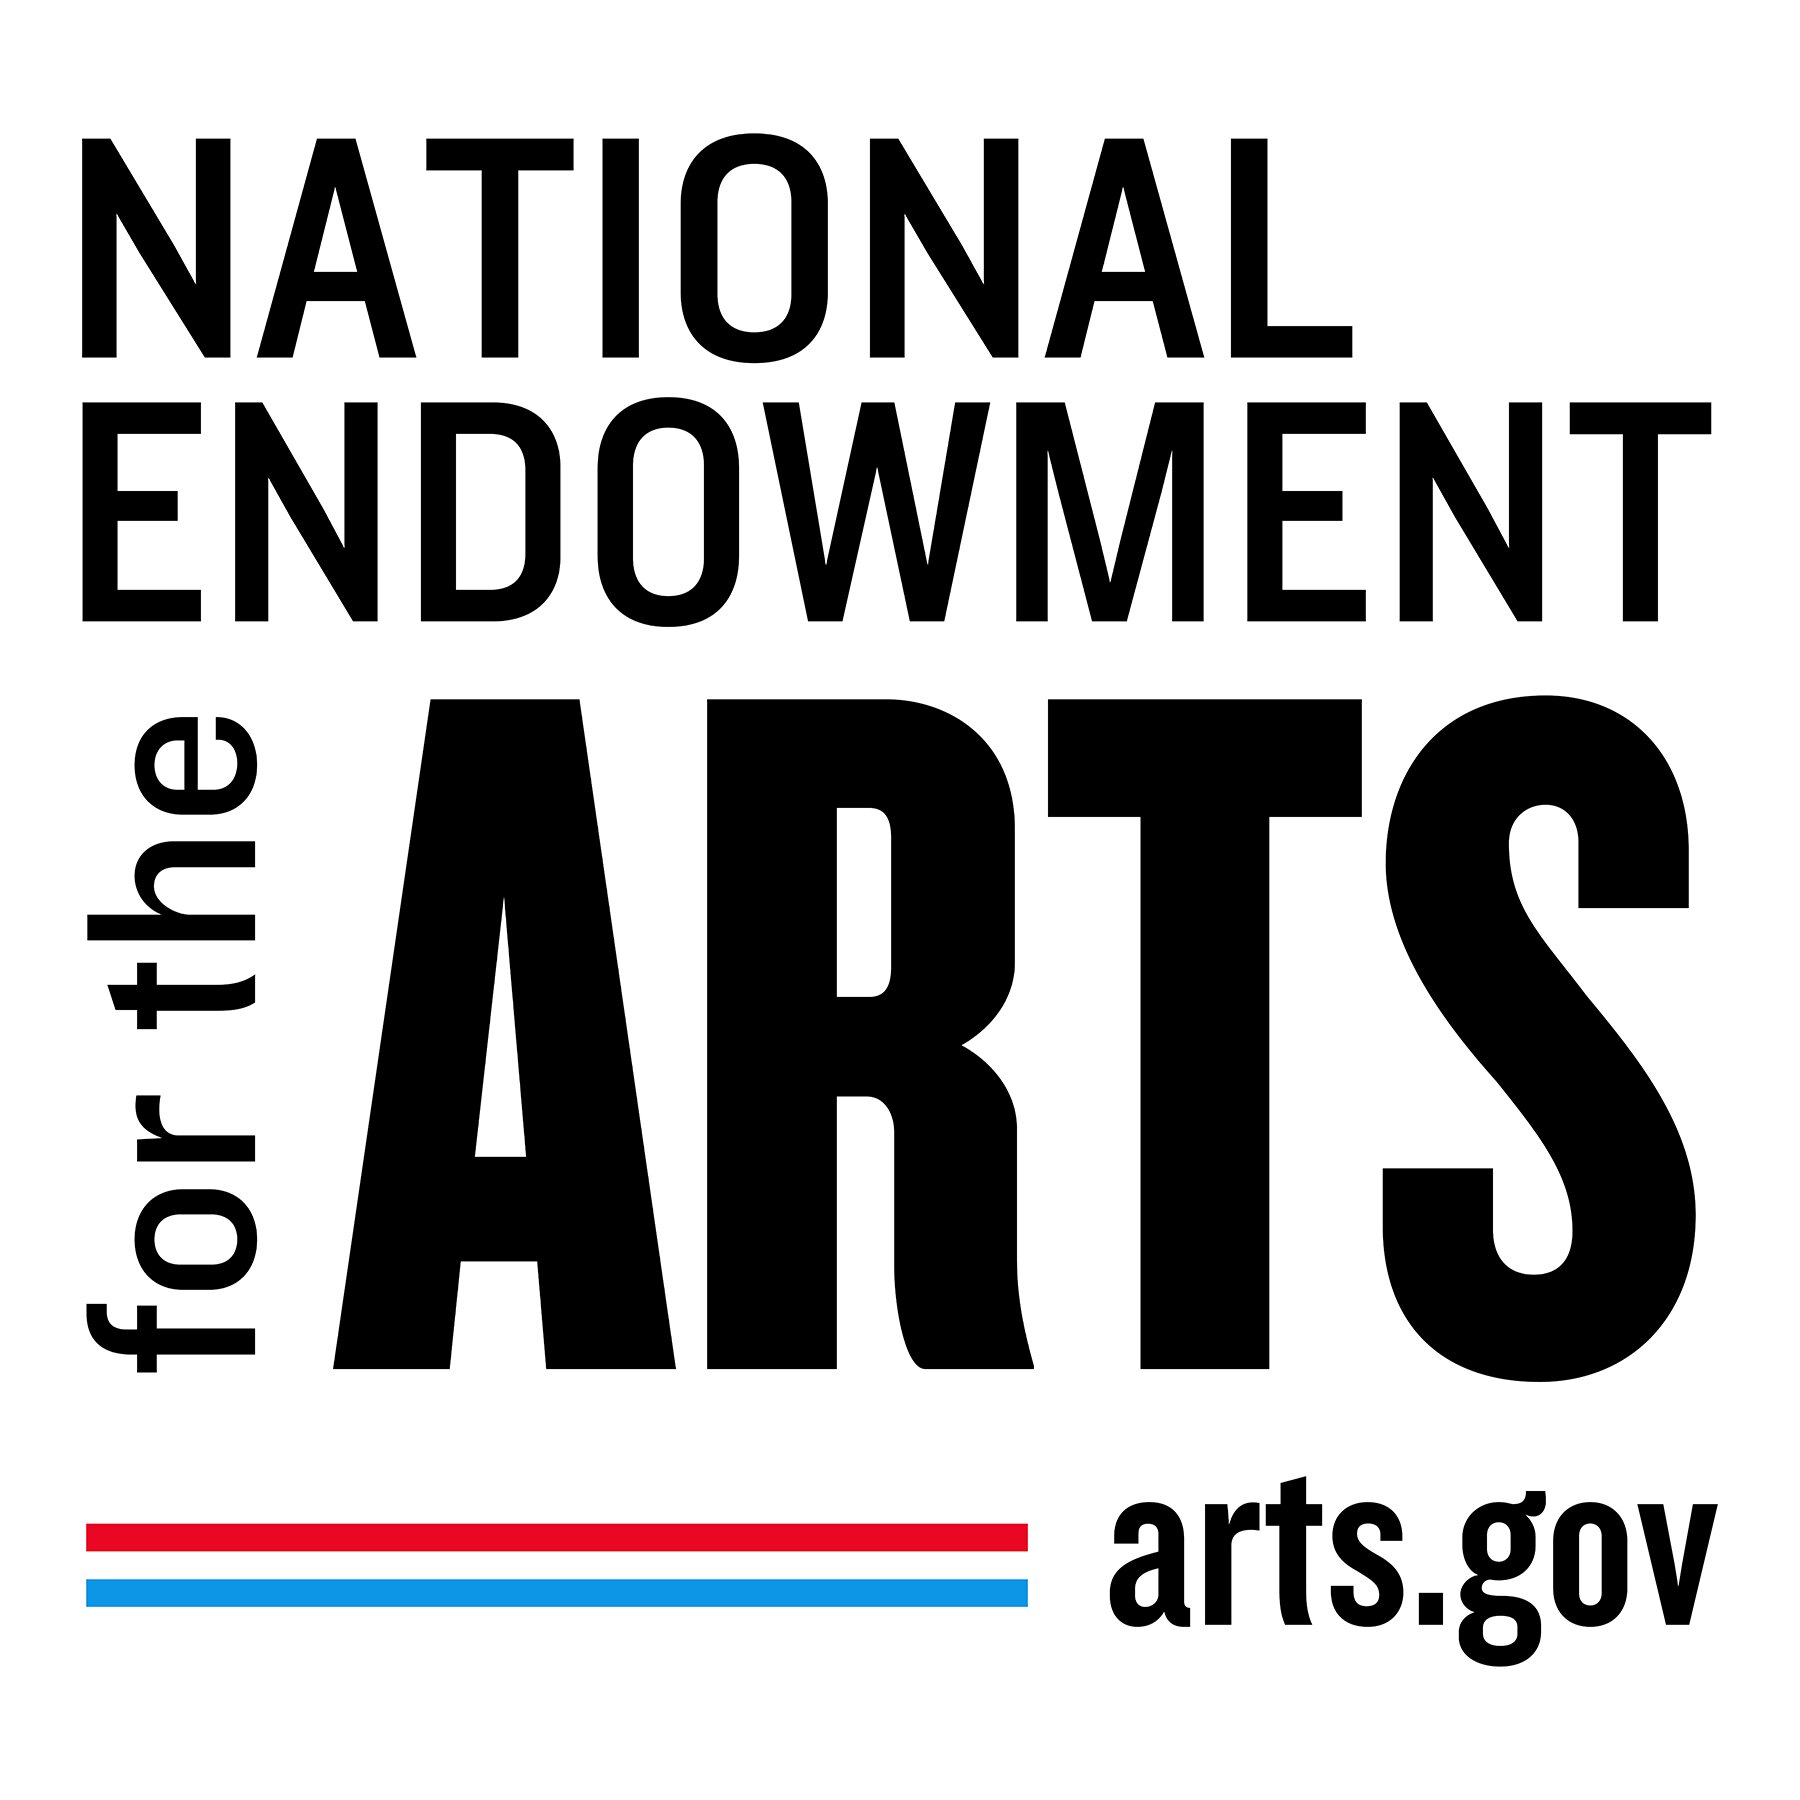 Endownment for the Arts logo.jpg